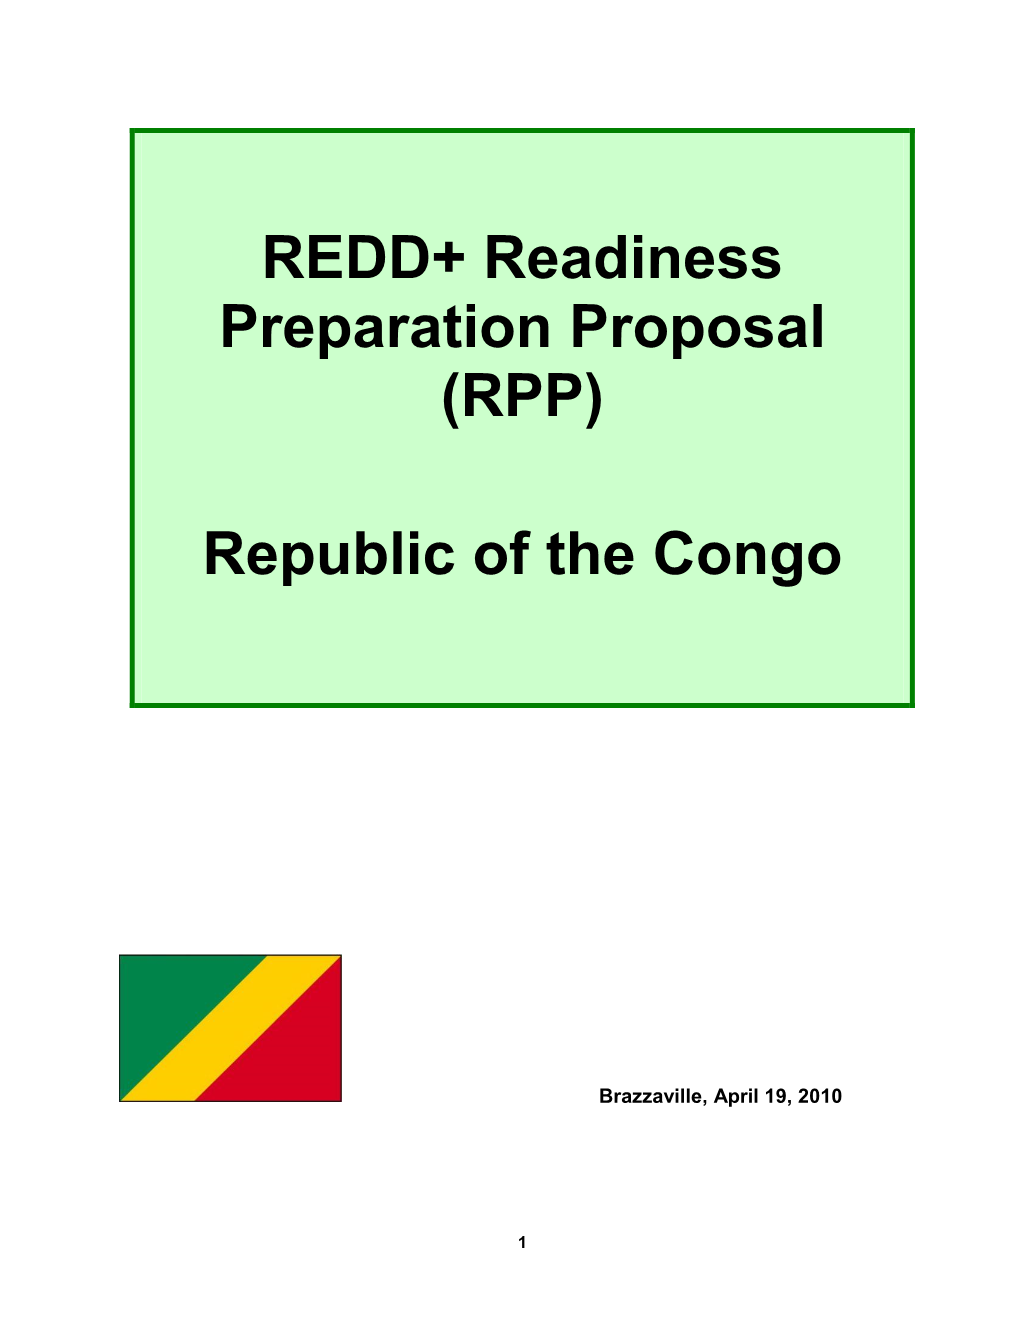 REDD+ Readiness Preparation Proposal (RPP)